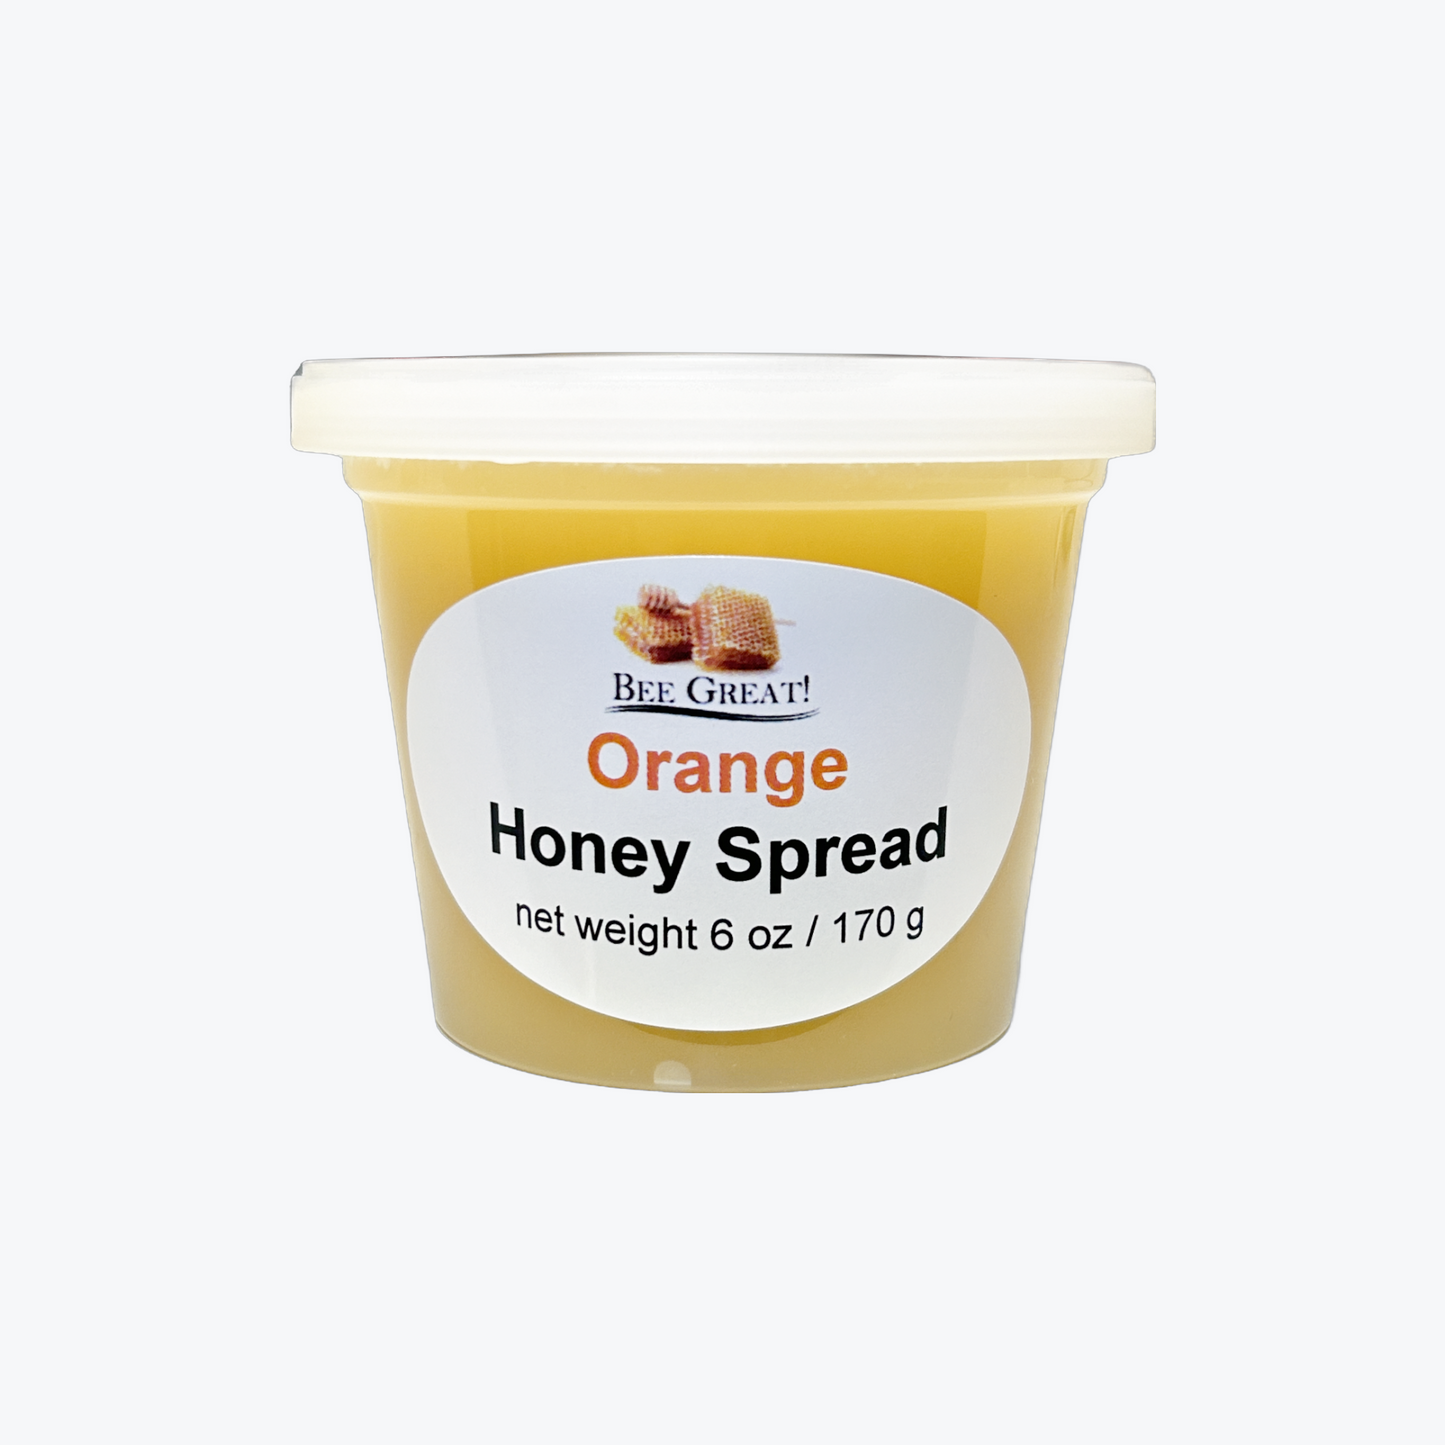 Honey Spread Sampler